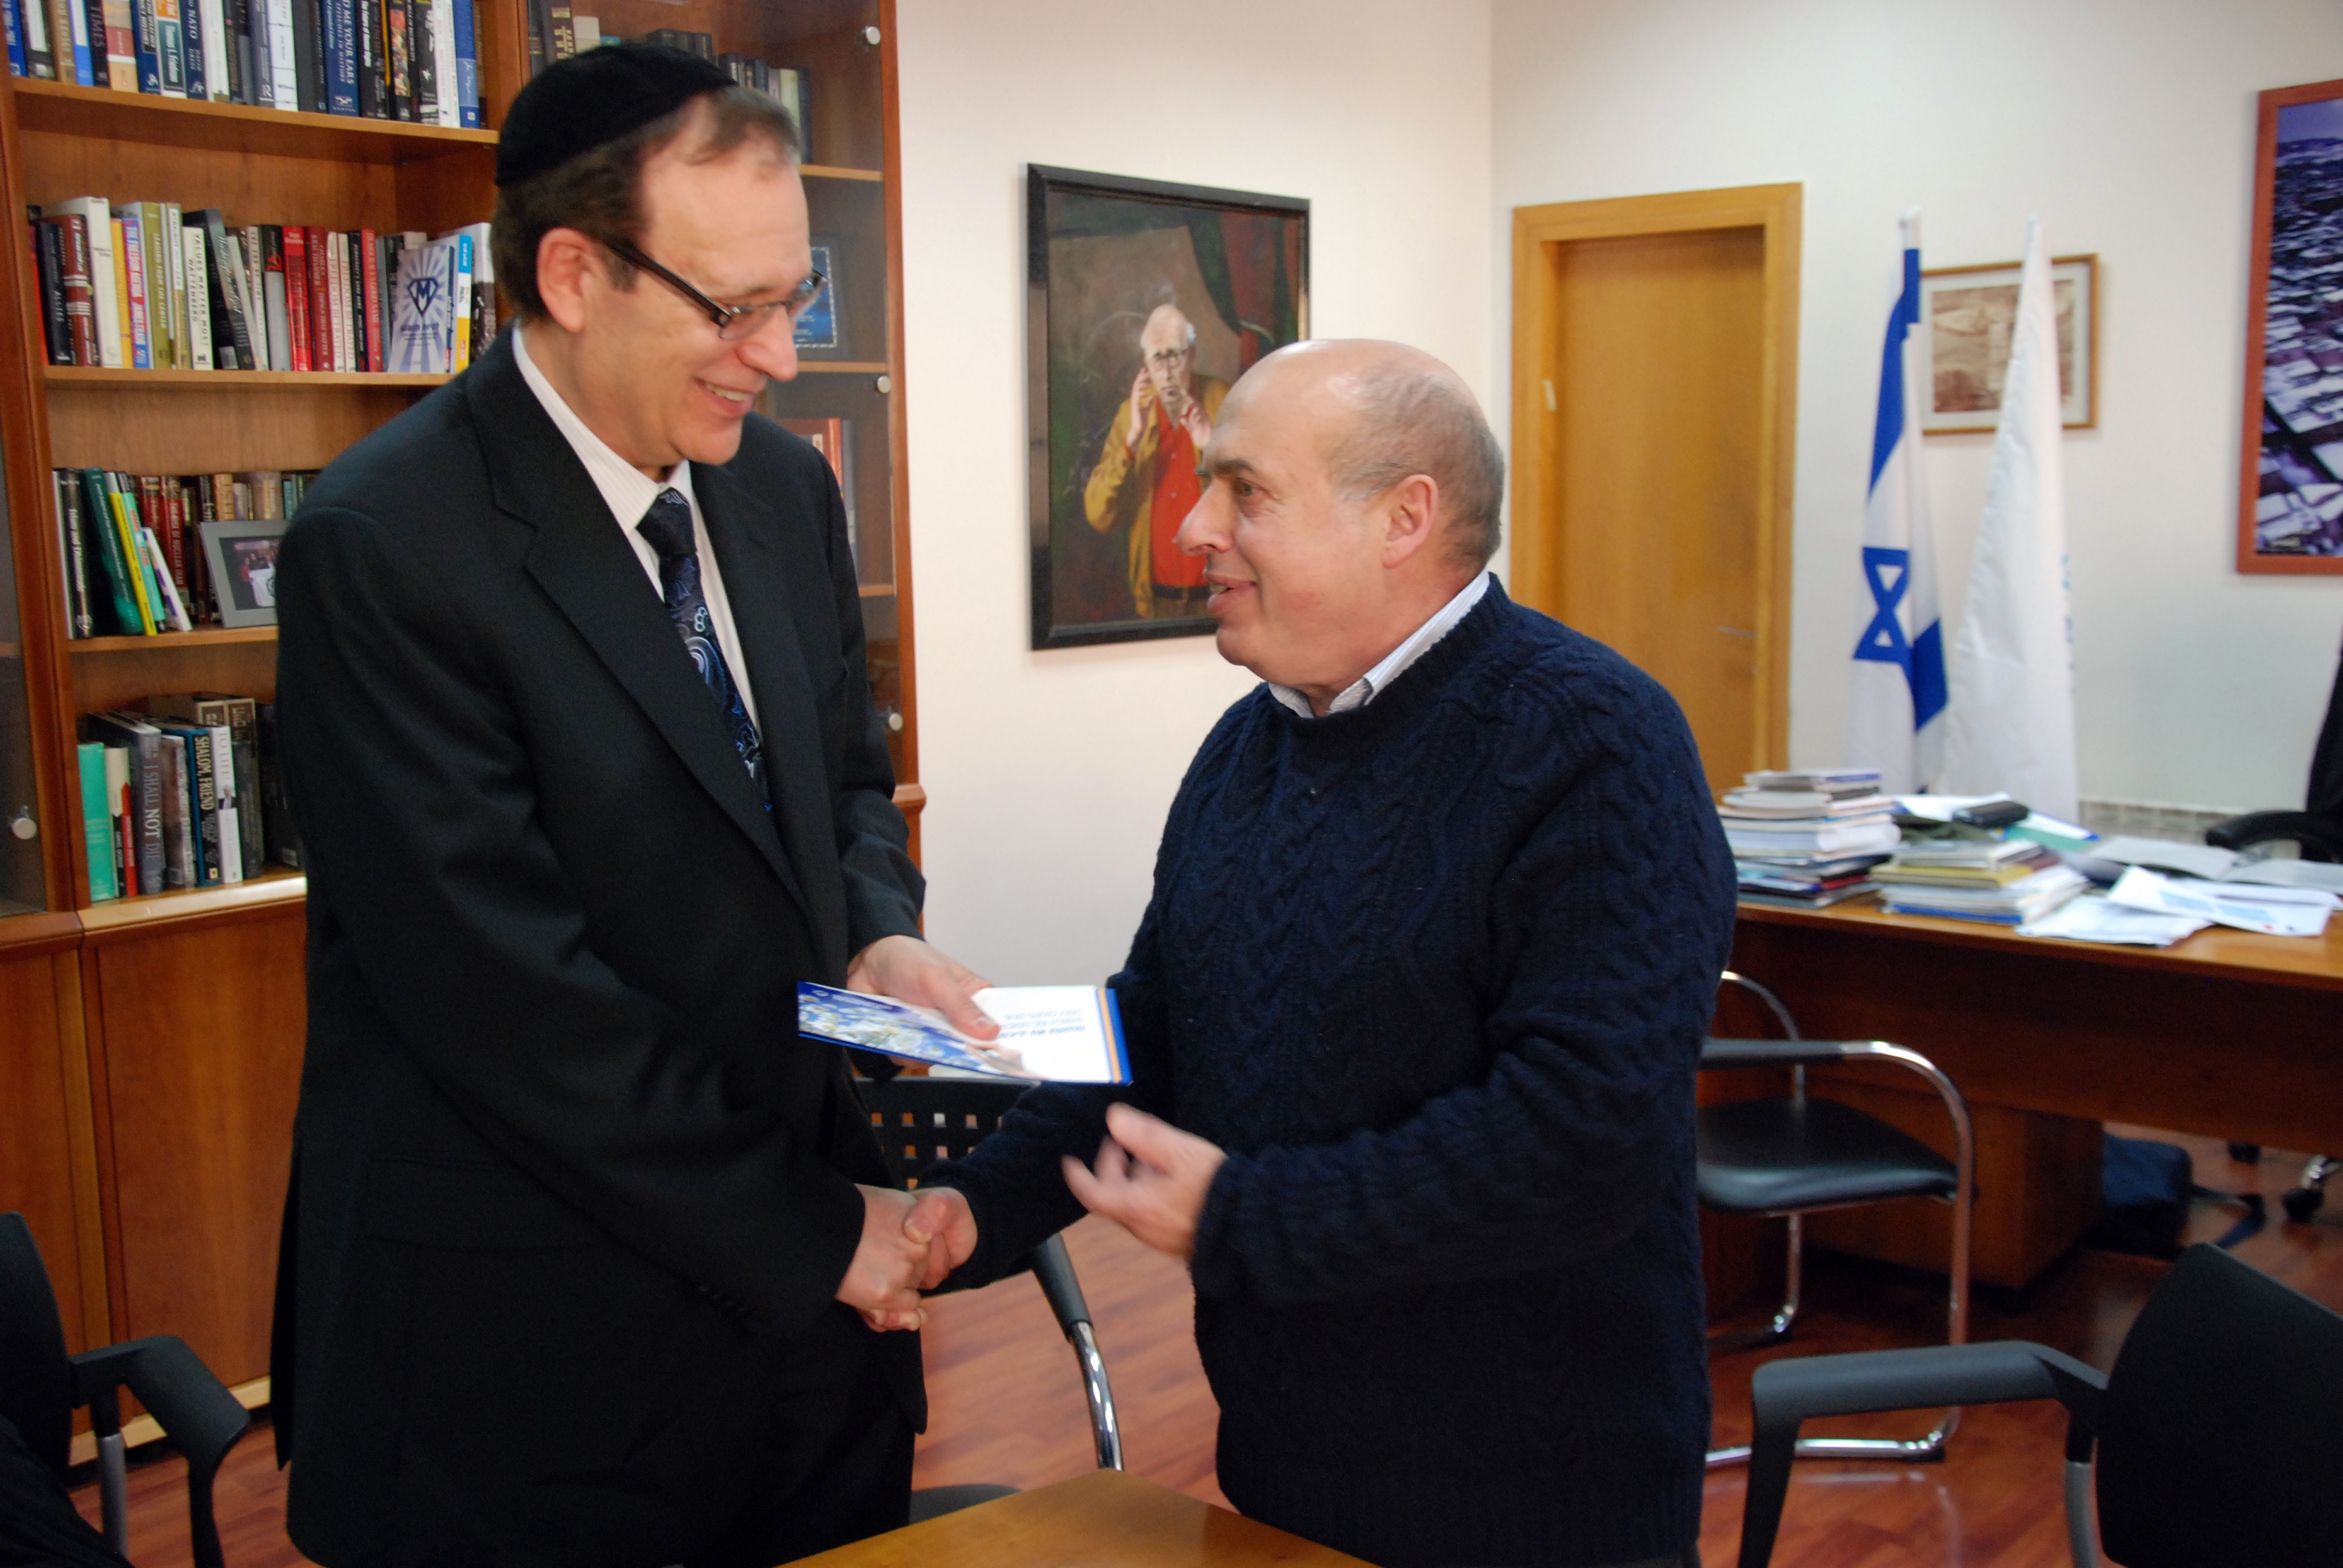 Steven Rothman (L) receives check from Jewish Agency Chairman Natan Sharansky (Photo: Dudi Saad/The Media Line).